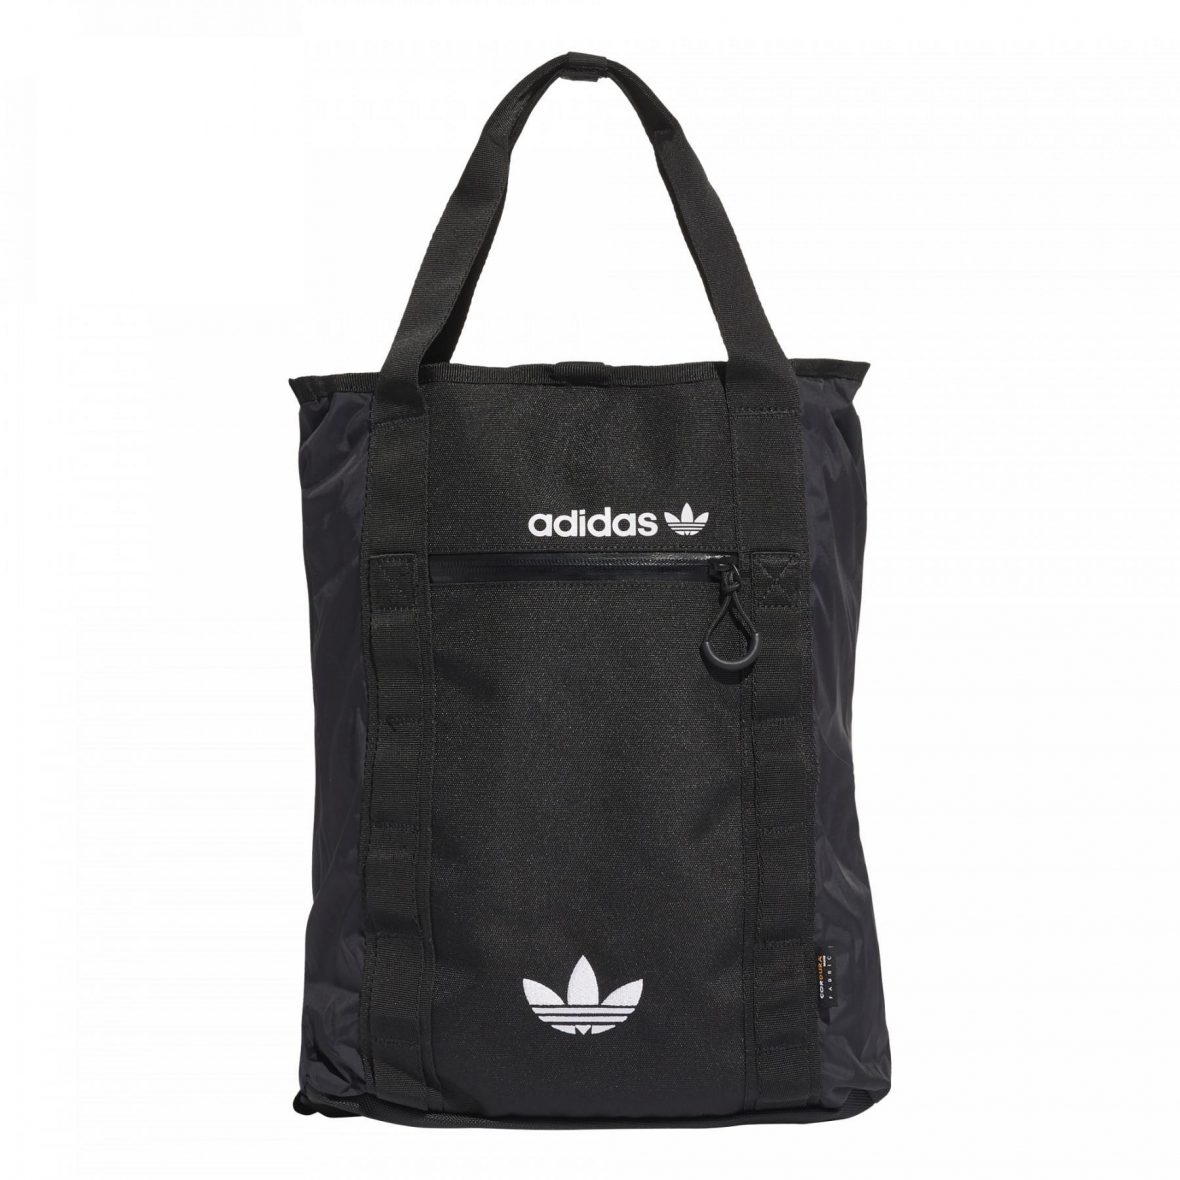 Adidas Unisex Adventure Cordura Convertible Cinch Backpack8